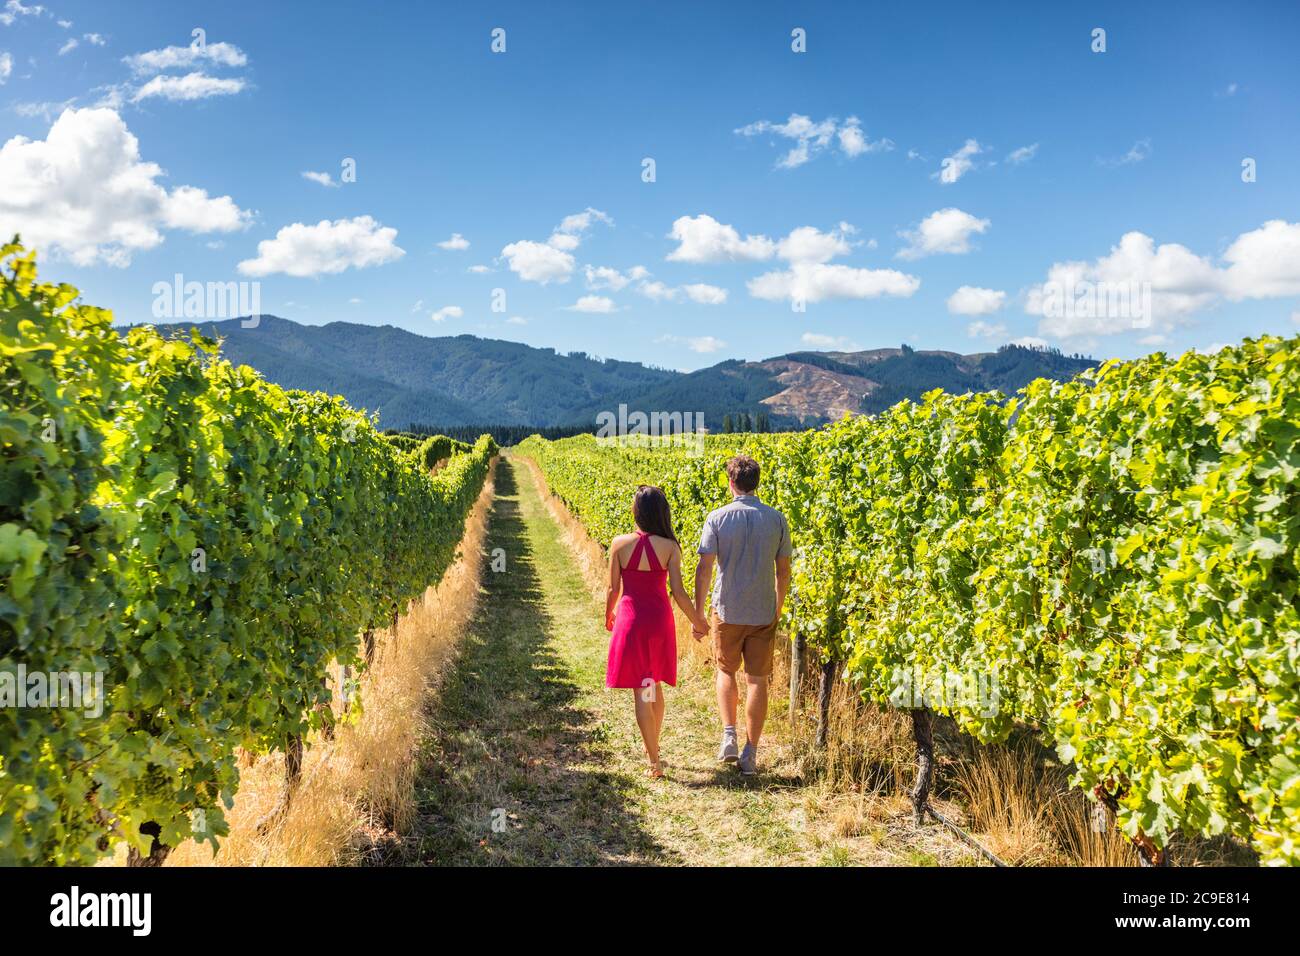 Vineyard couple tourists New Zealand travel visiting Marlborough region winery walking amongst grapevines. People on holiday wine tasting experience Stock Photo